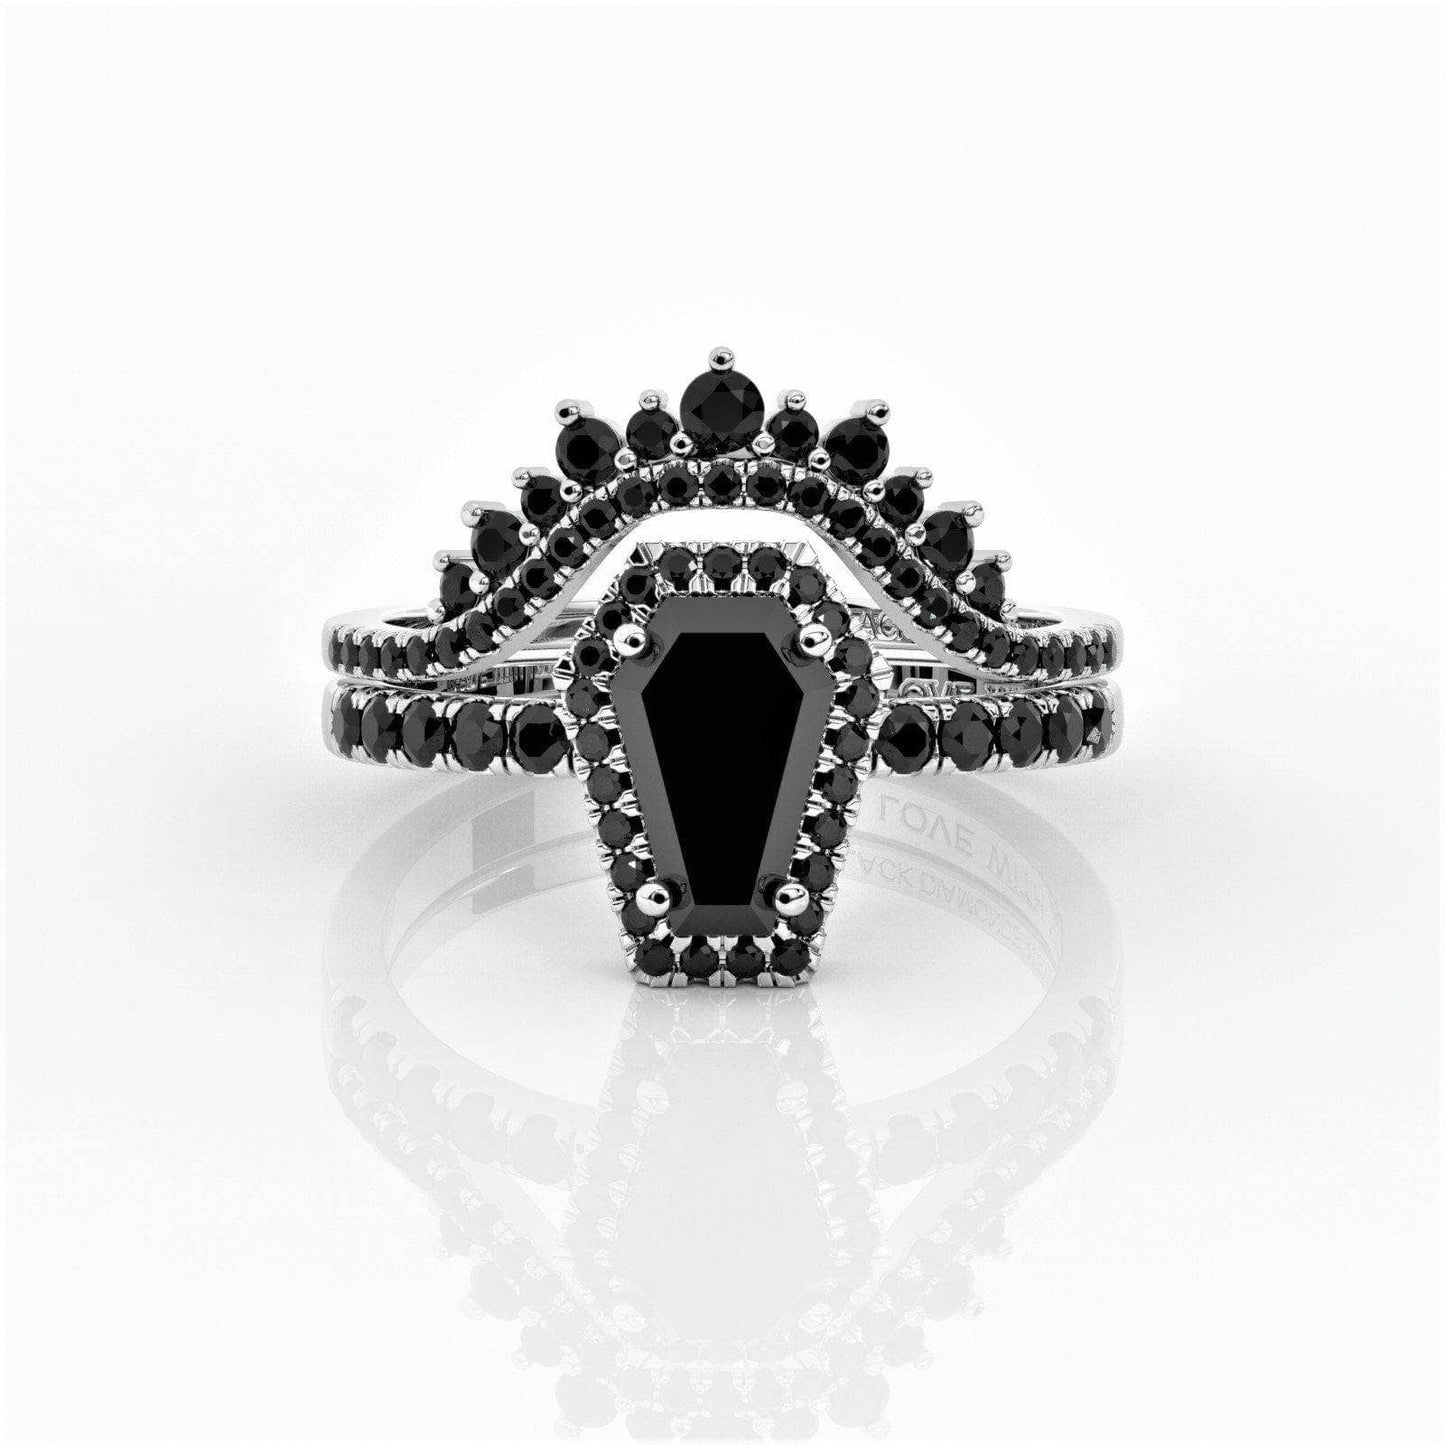 Flash Sale- Best Love Rings- Rare Coffin Cut Moissanite 14k Gold Gothic Ring Set-Black Diamonds New York